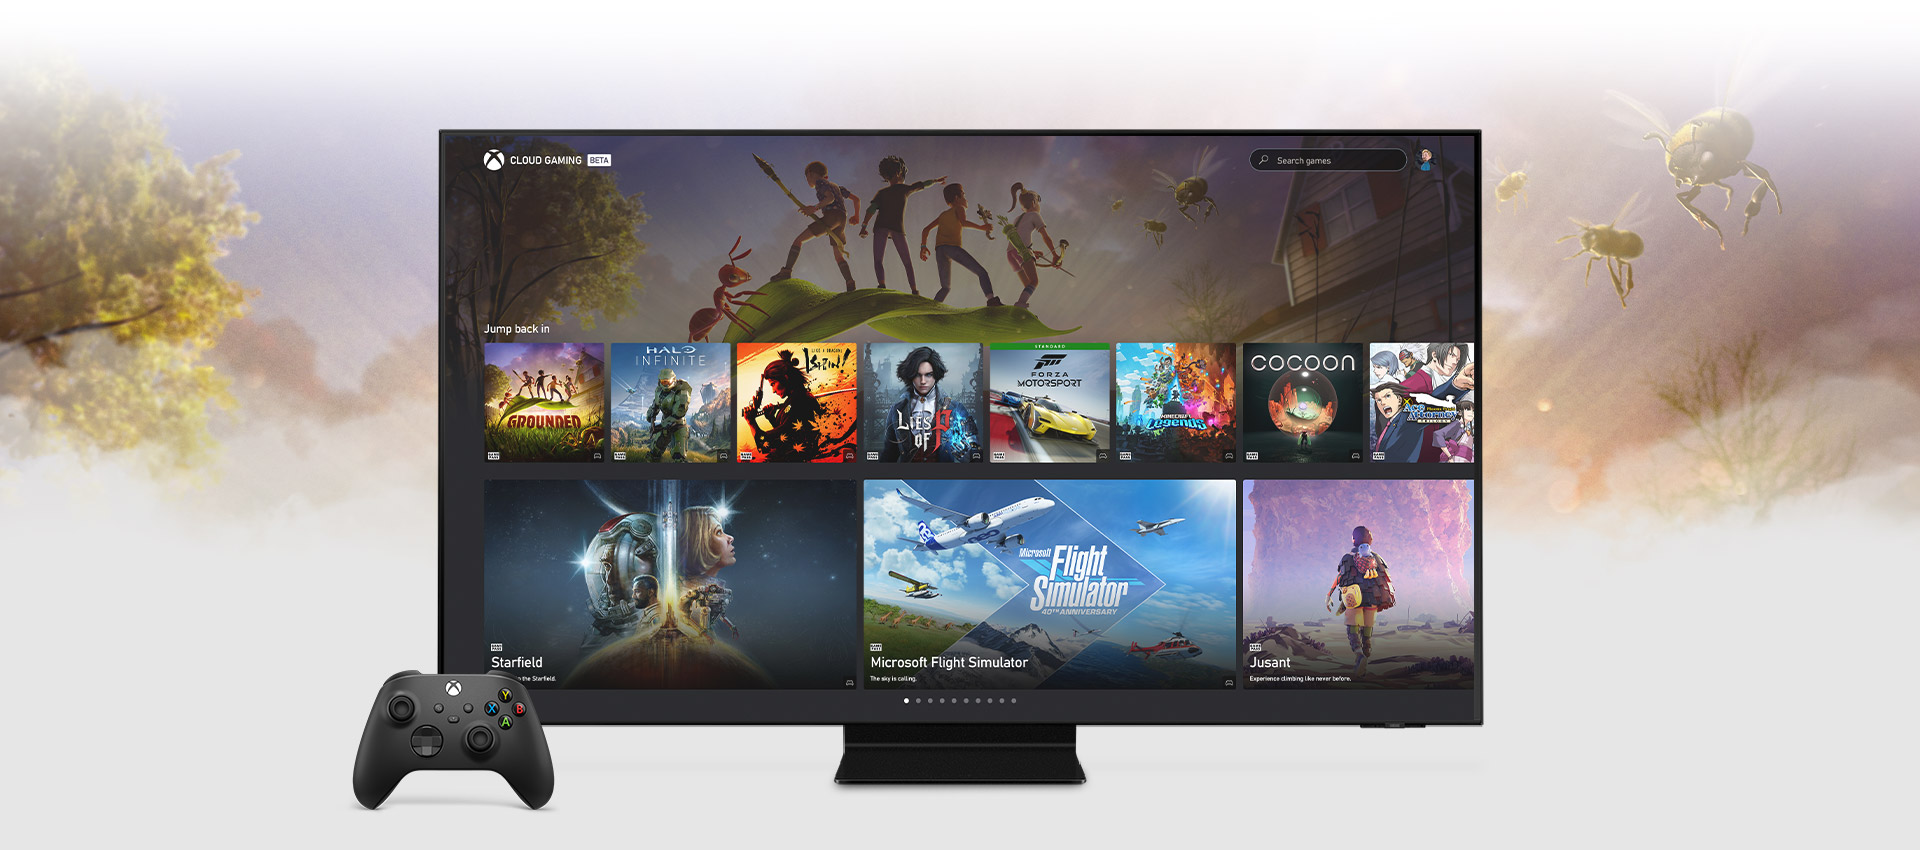 Xbox app for smart TVs